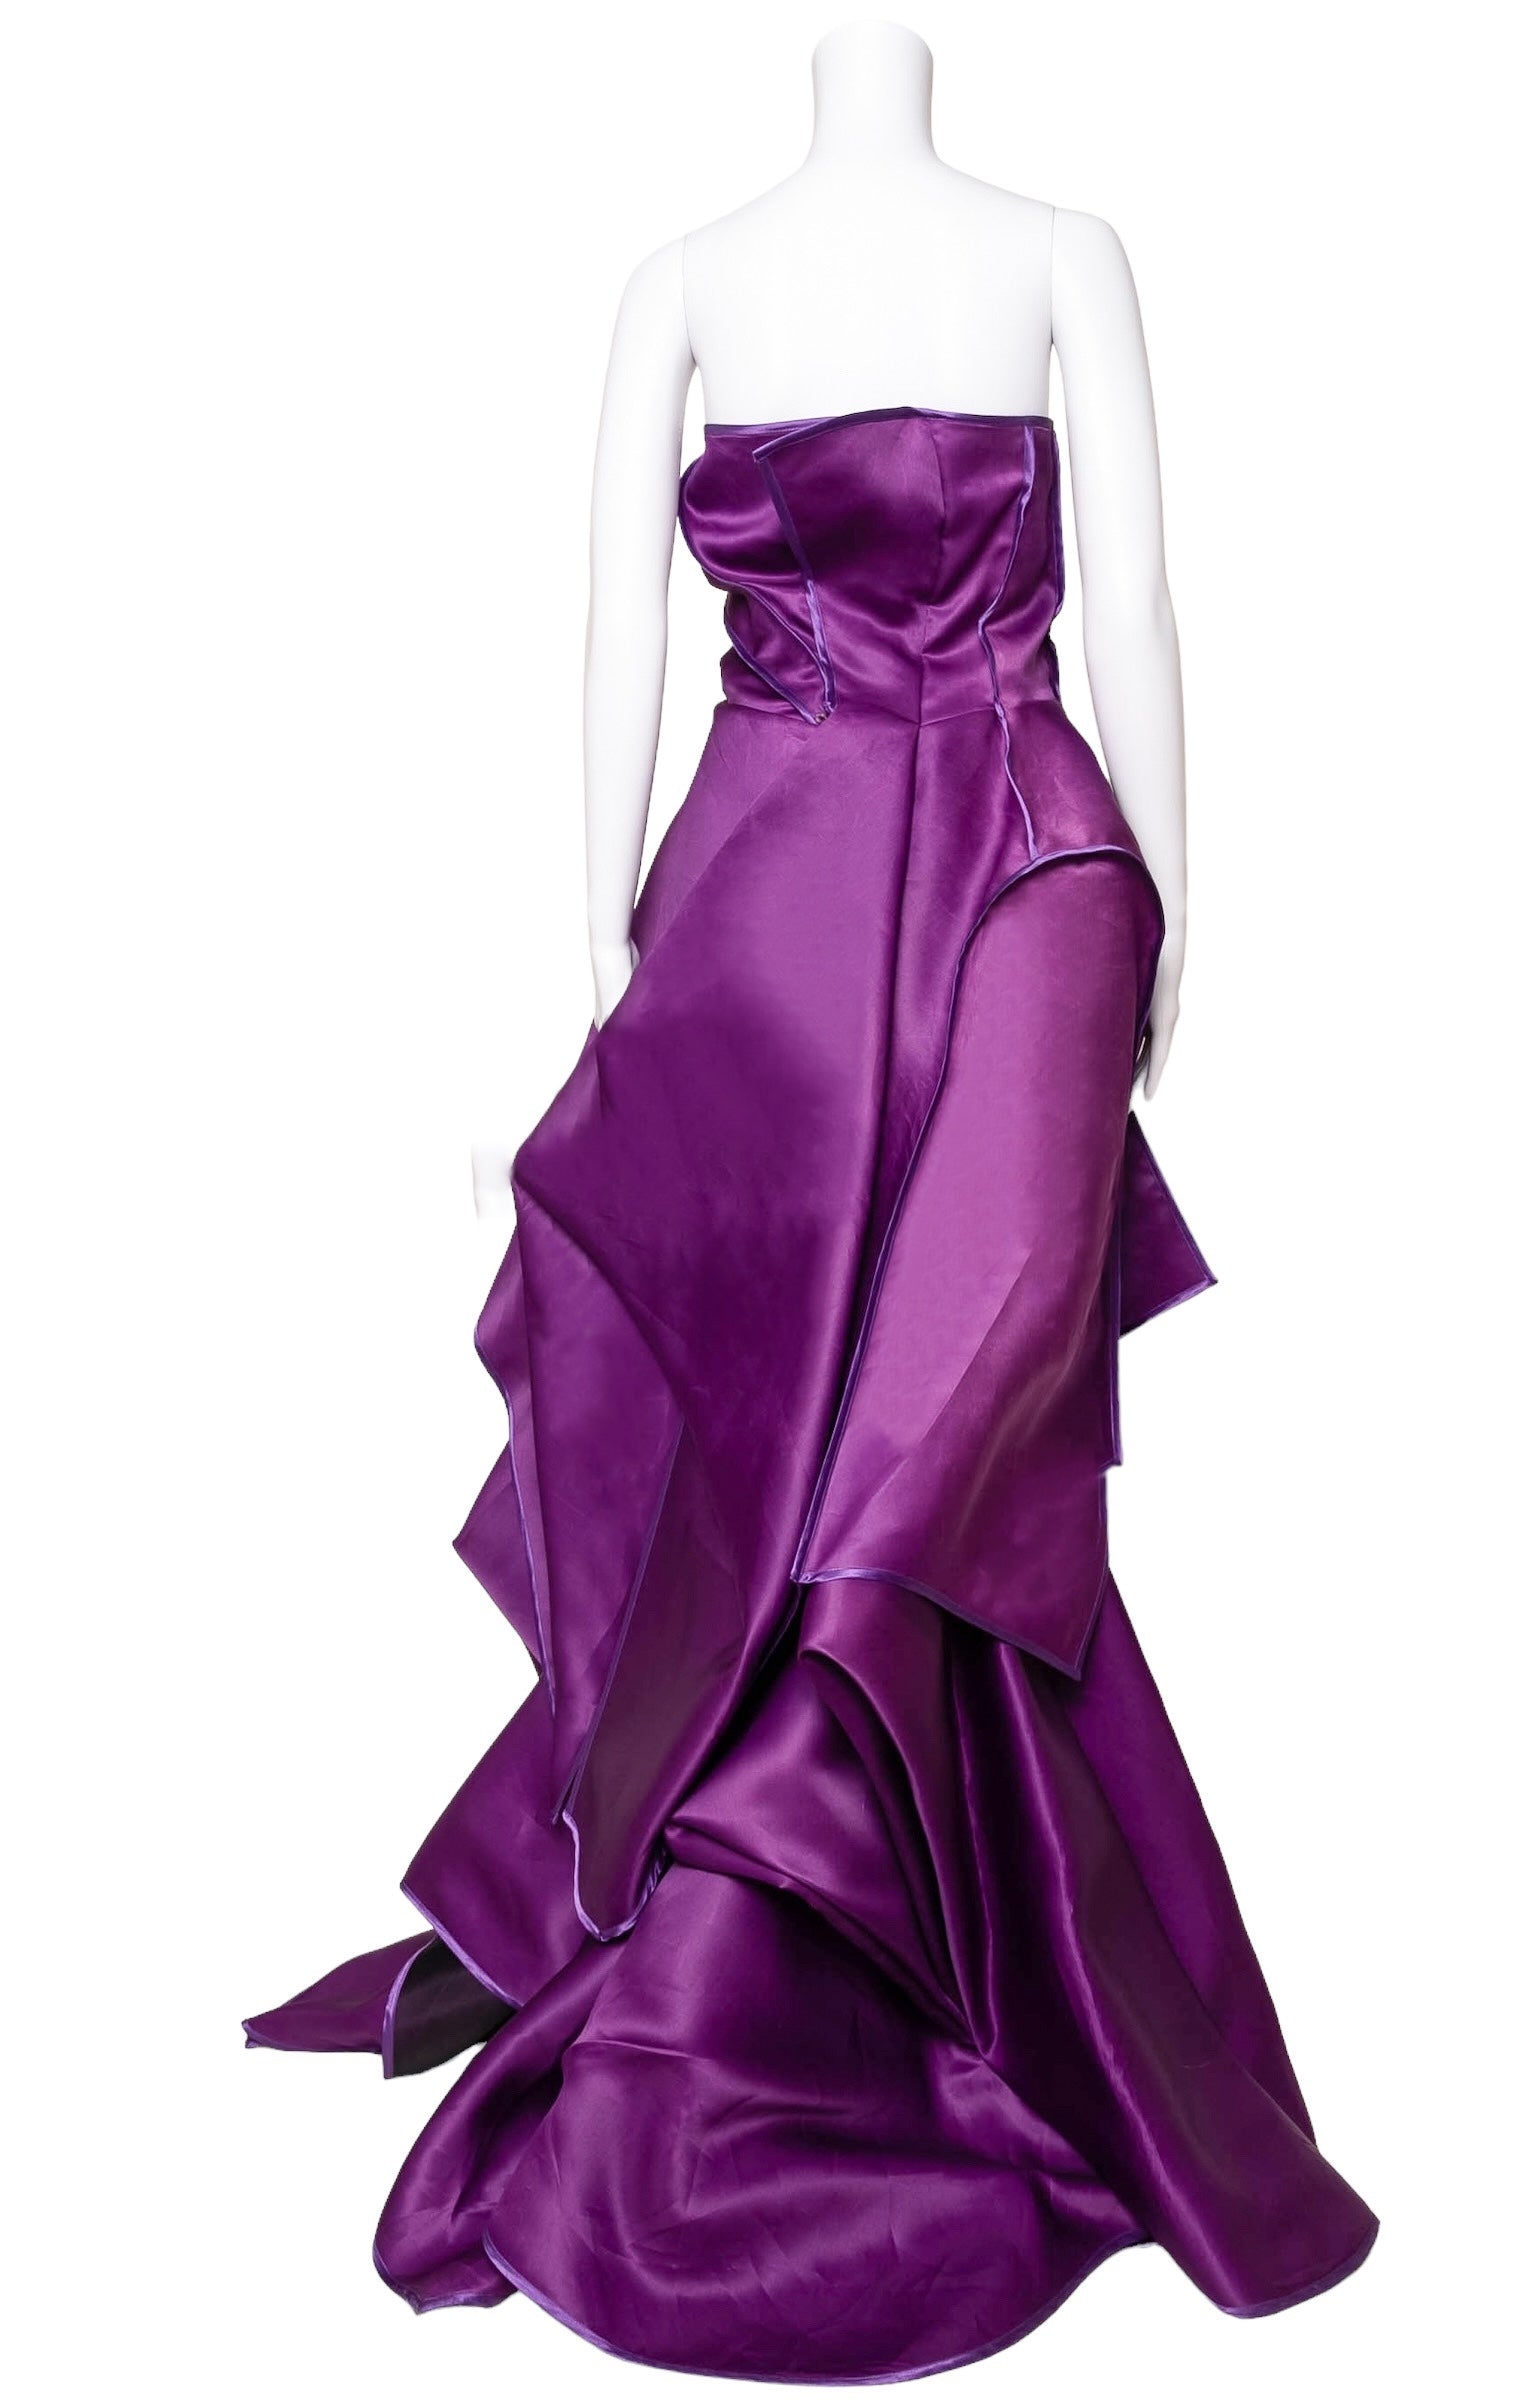 VINTAGE CHRISTIAN LACROIX (RARE) Dress Size: FR 38 / Comparable to US 4-6